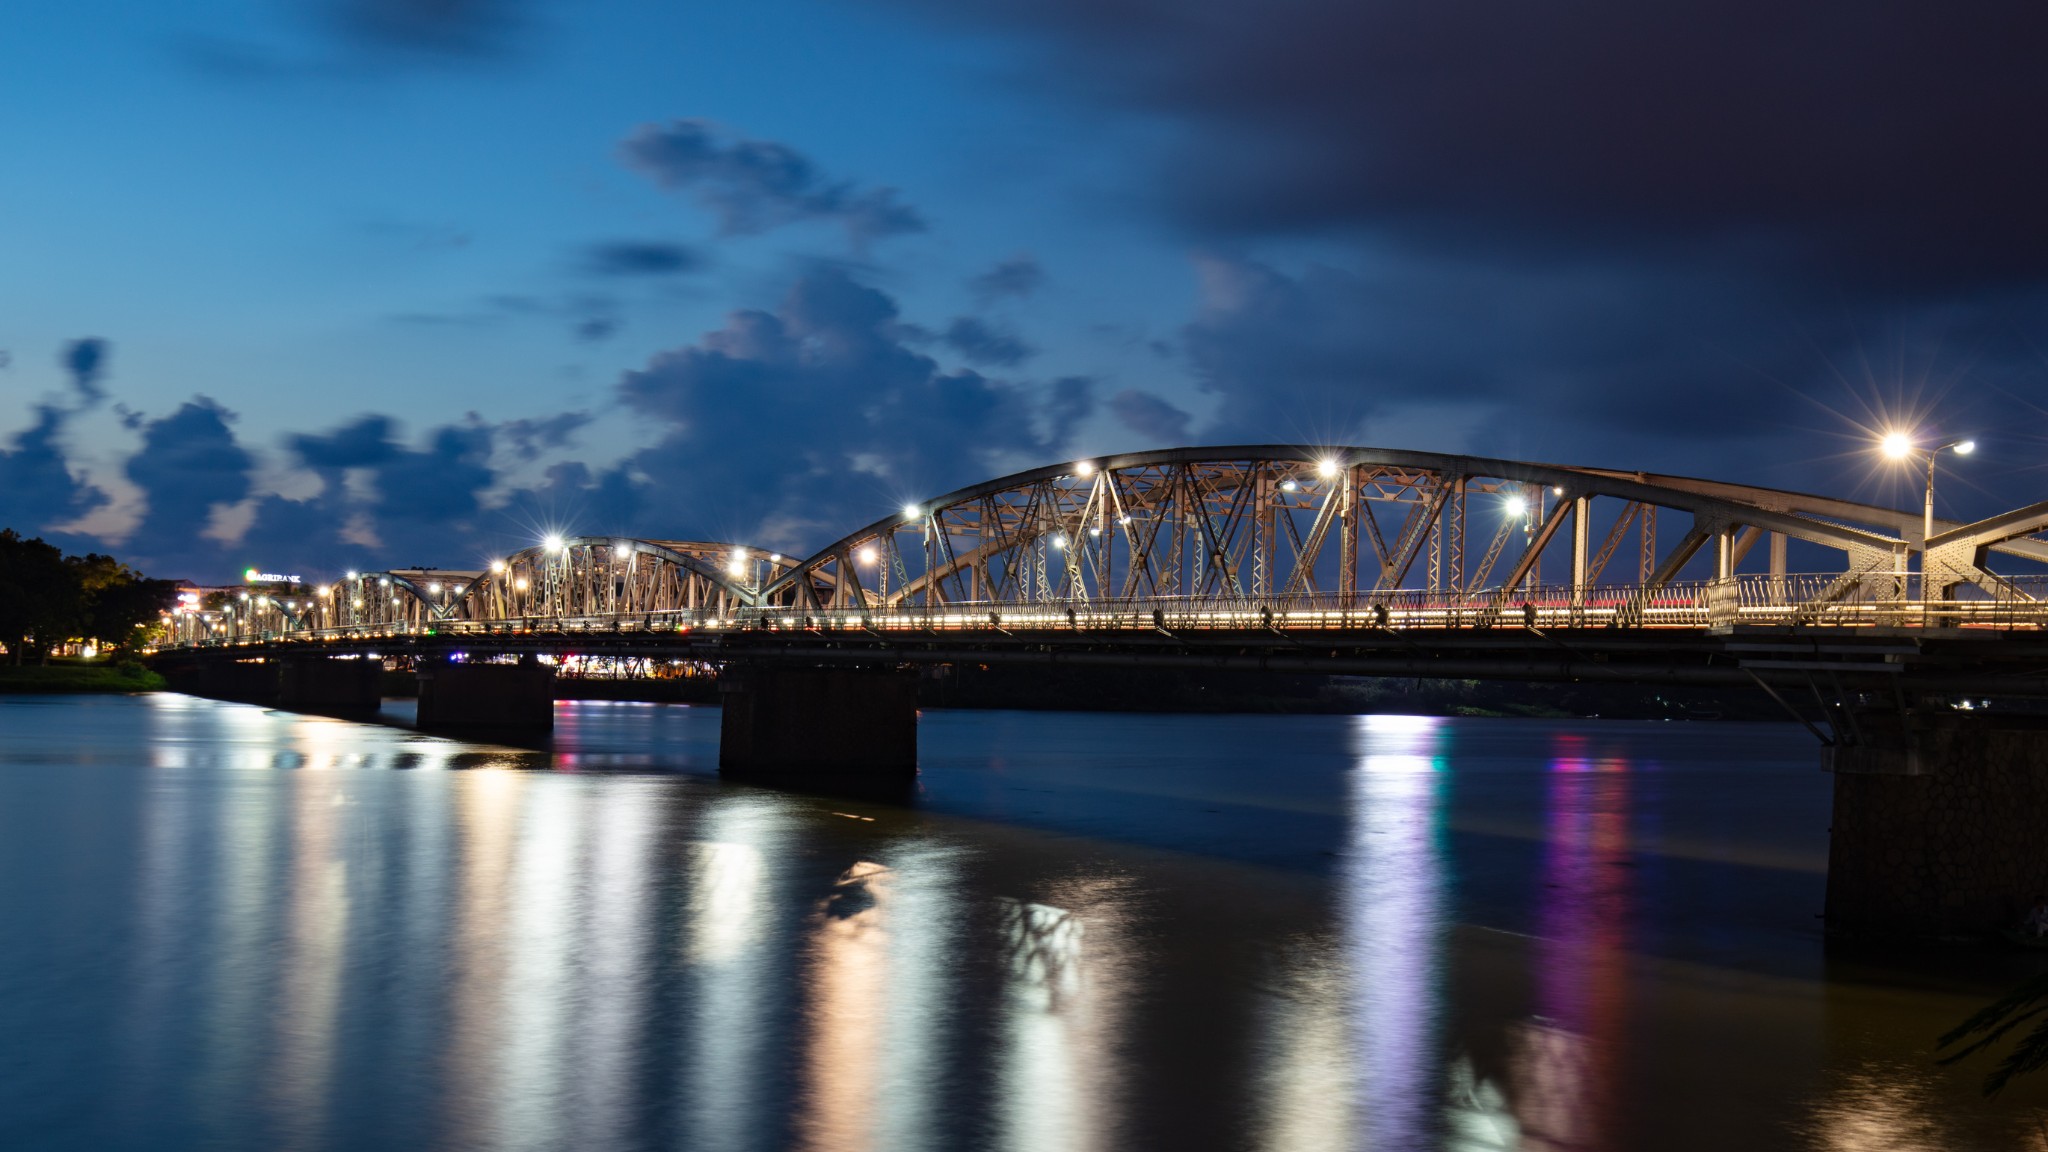 Day 5 Truong Tien Bridge At Night